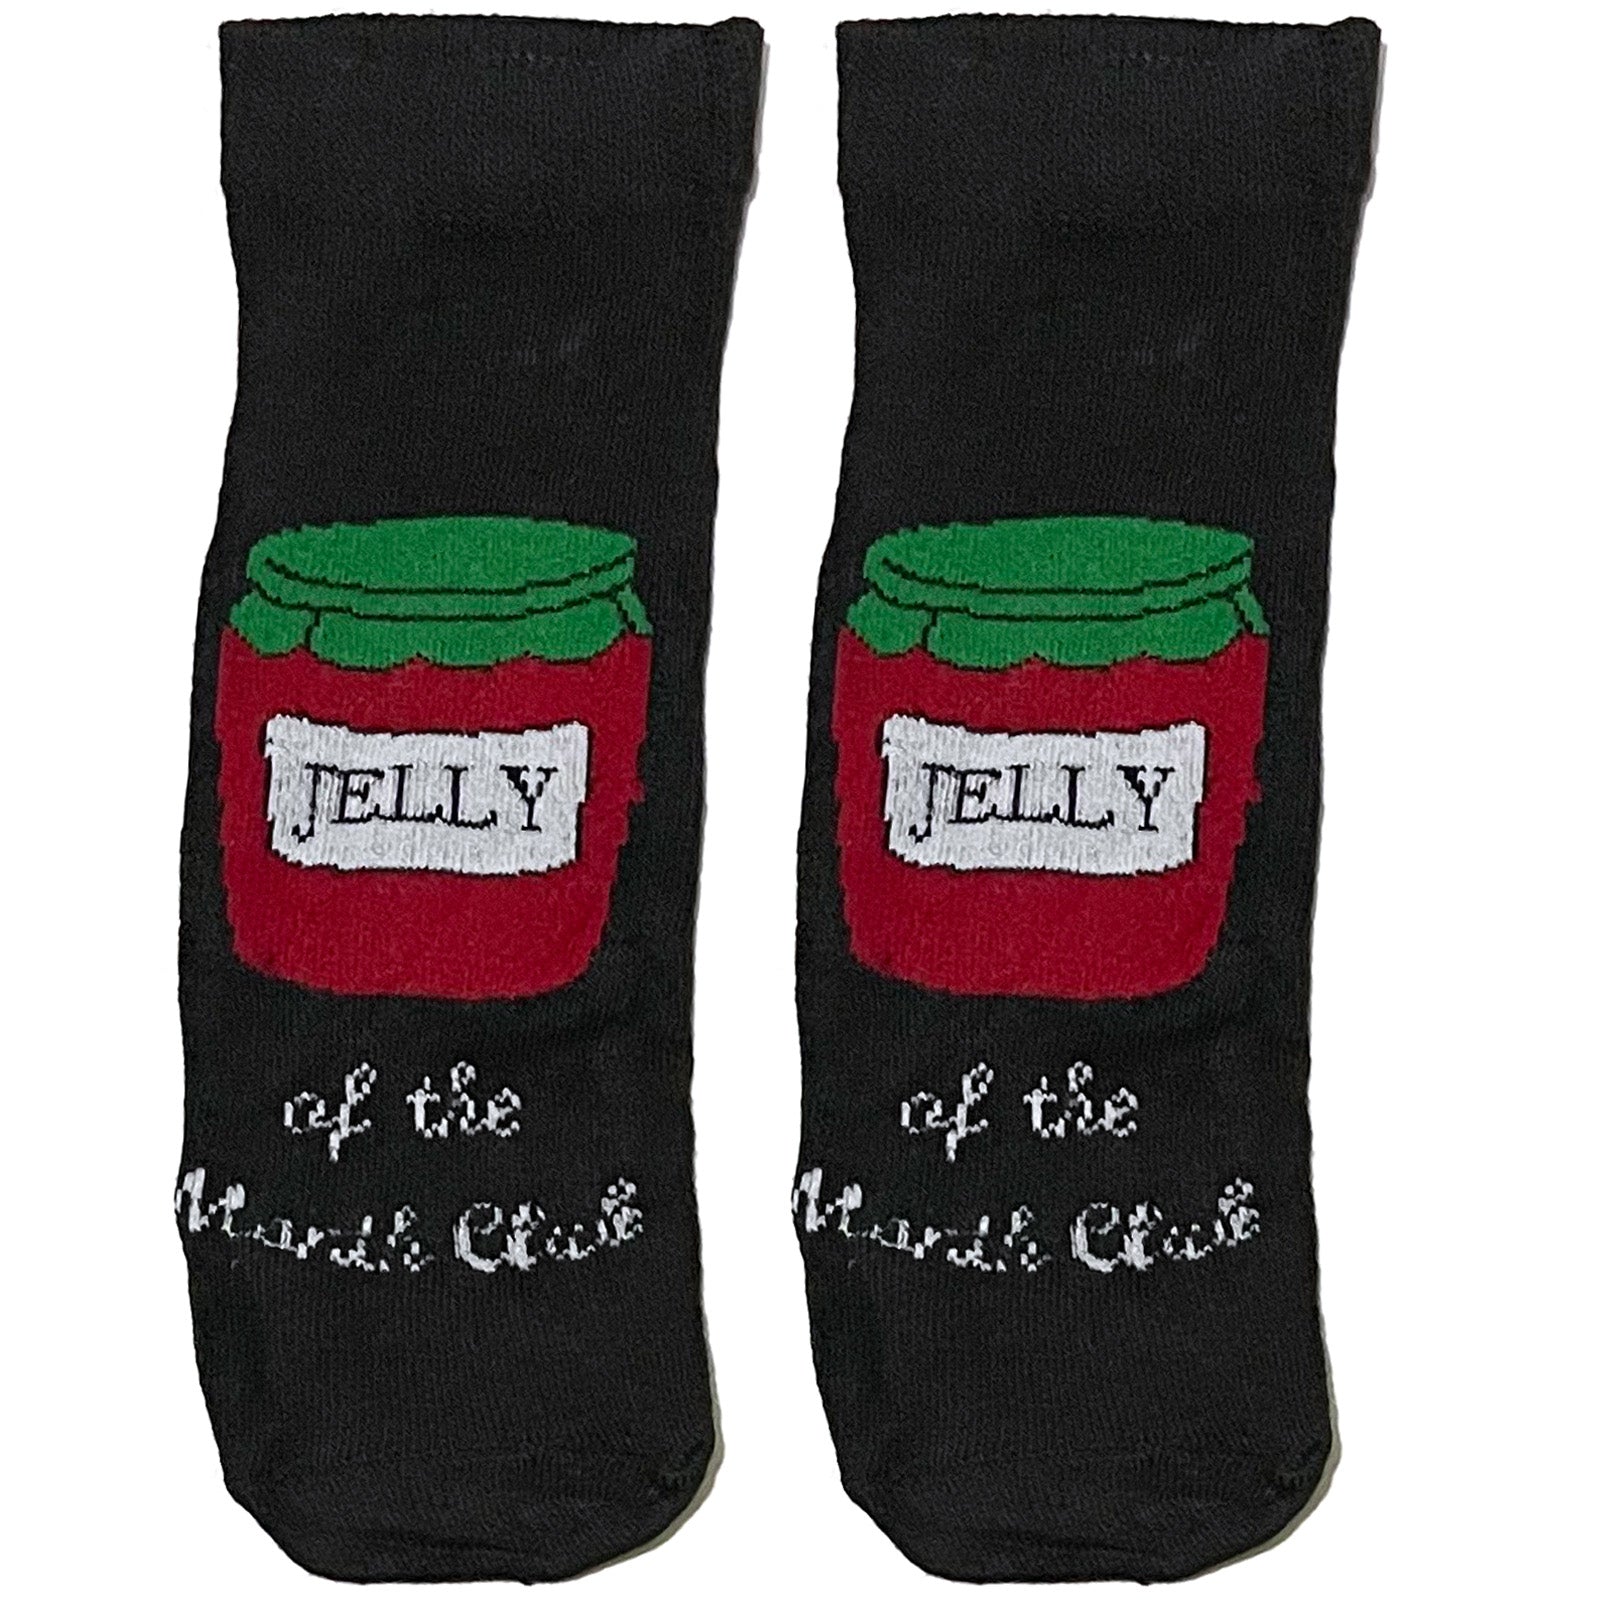 Black Jelly Jar Ankle Socks